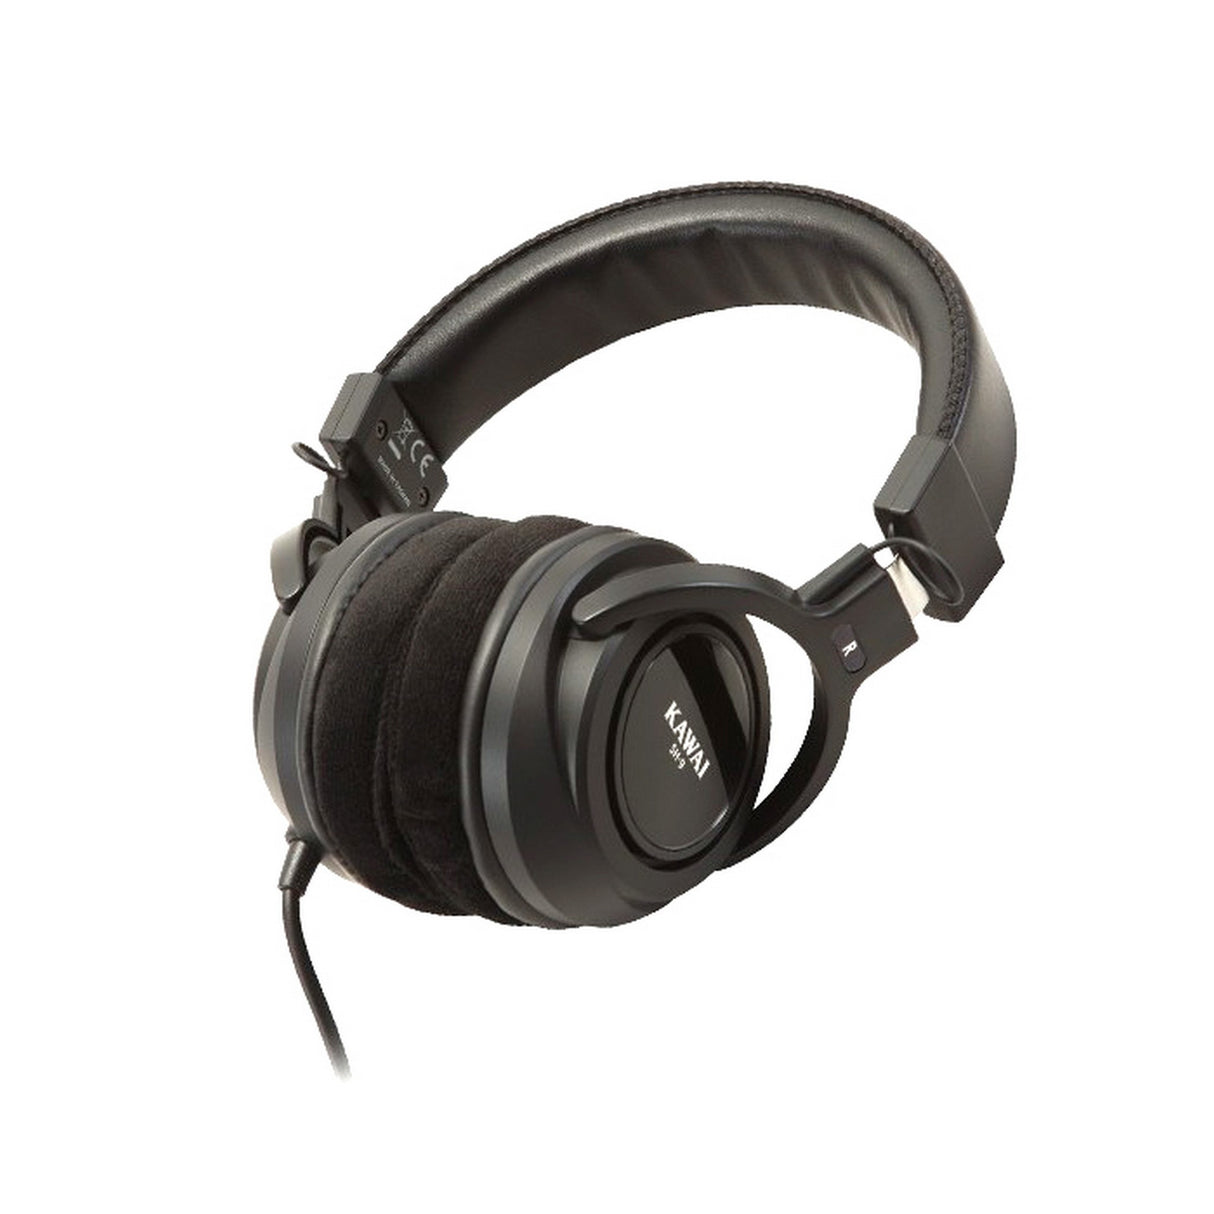 Kawai SH-9 High-Performance Stereo Headphones